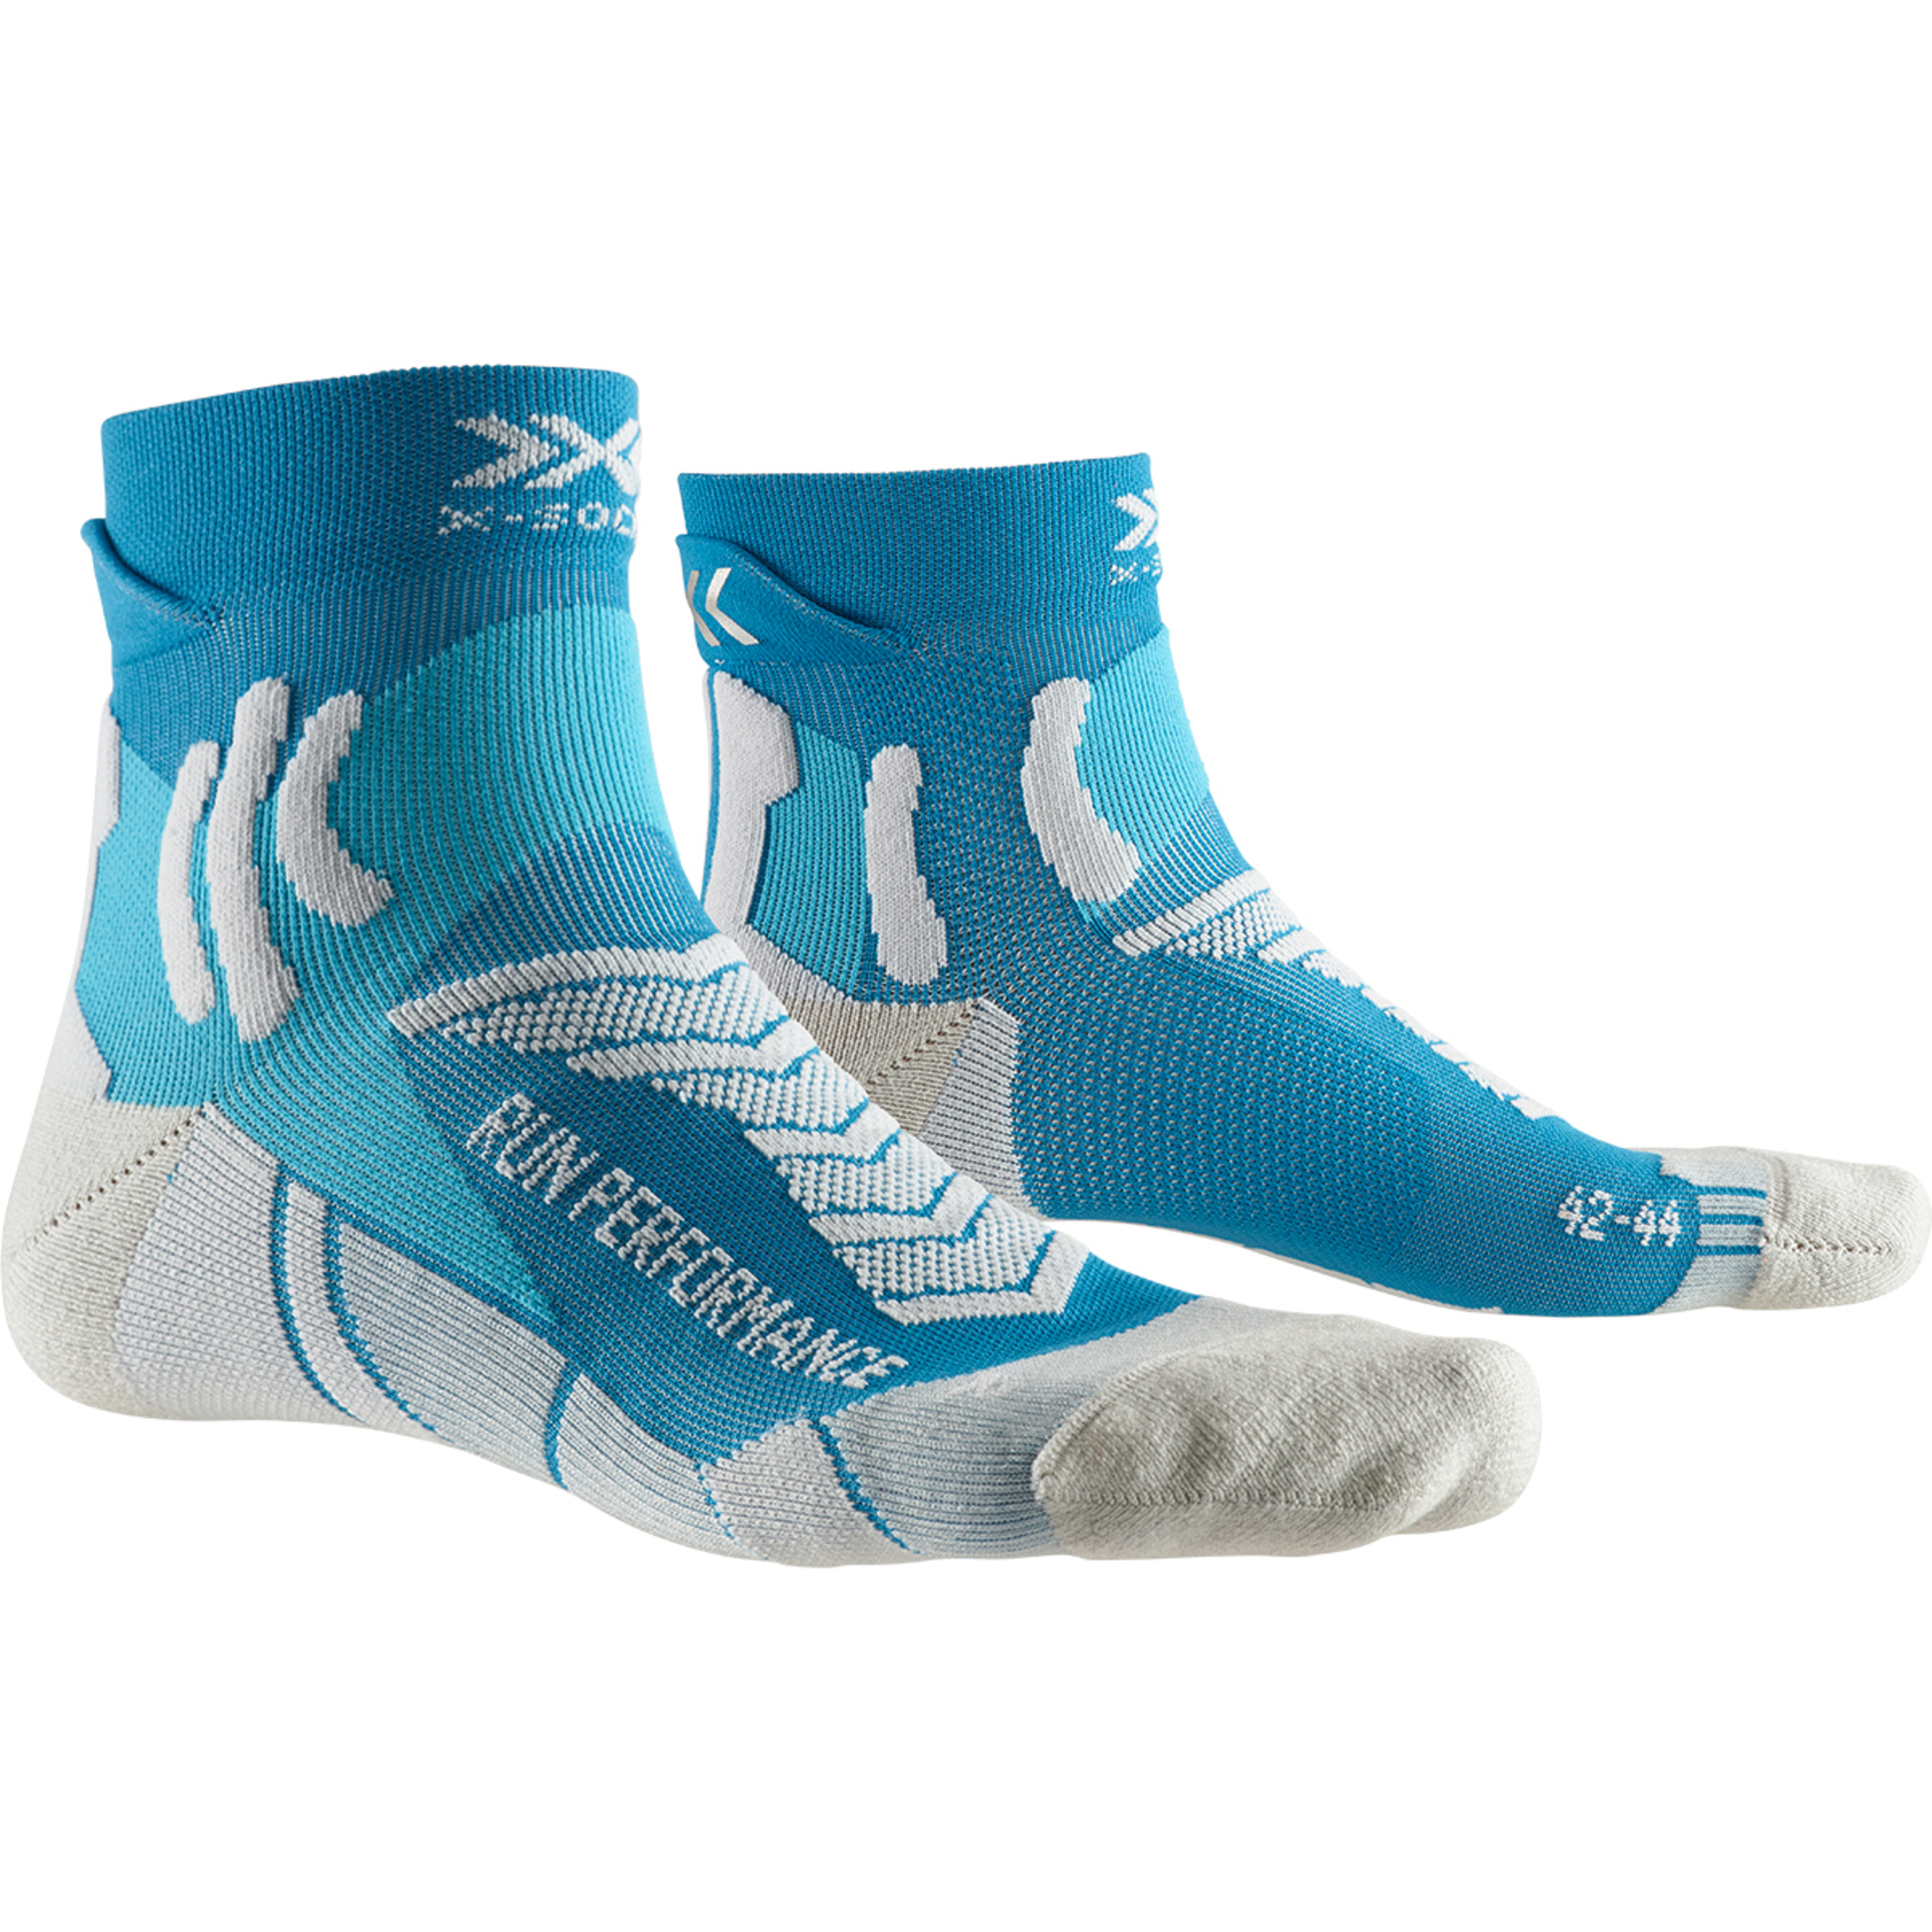 Meia Run Performance  X-socks - Azul | Sport Zone MKP